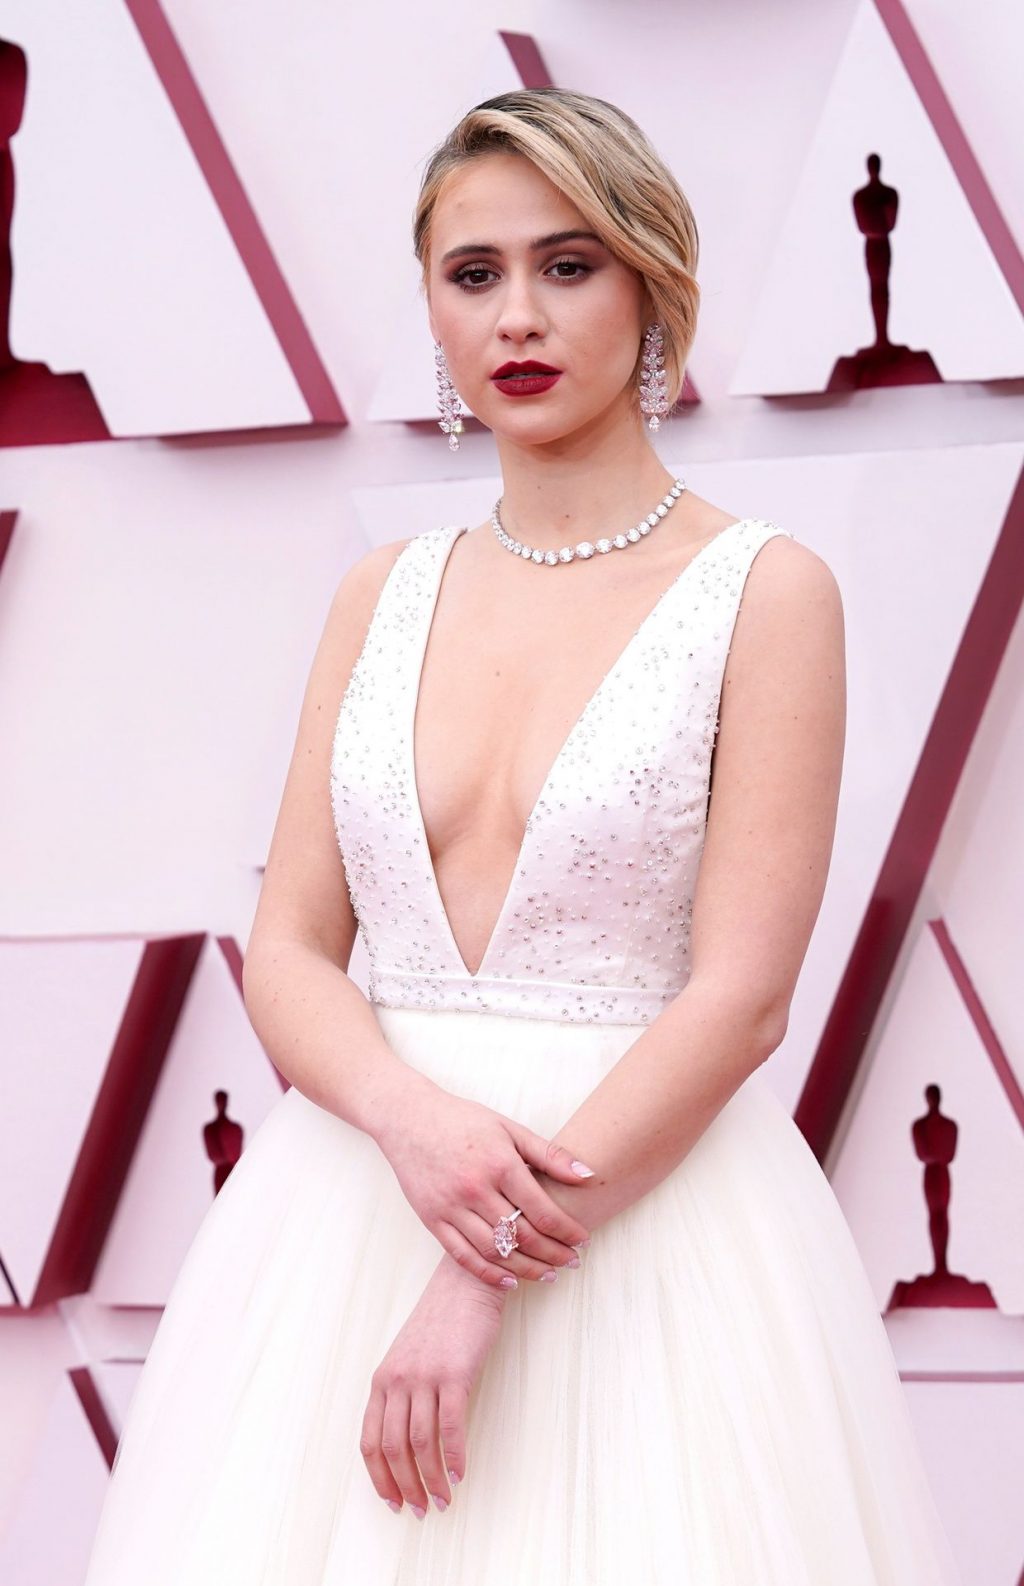 Maria Bakalova Stuns on The Red Carpet in a White Dress at The 93rd Oscars (35 Photos)